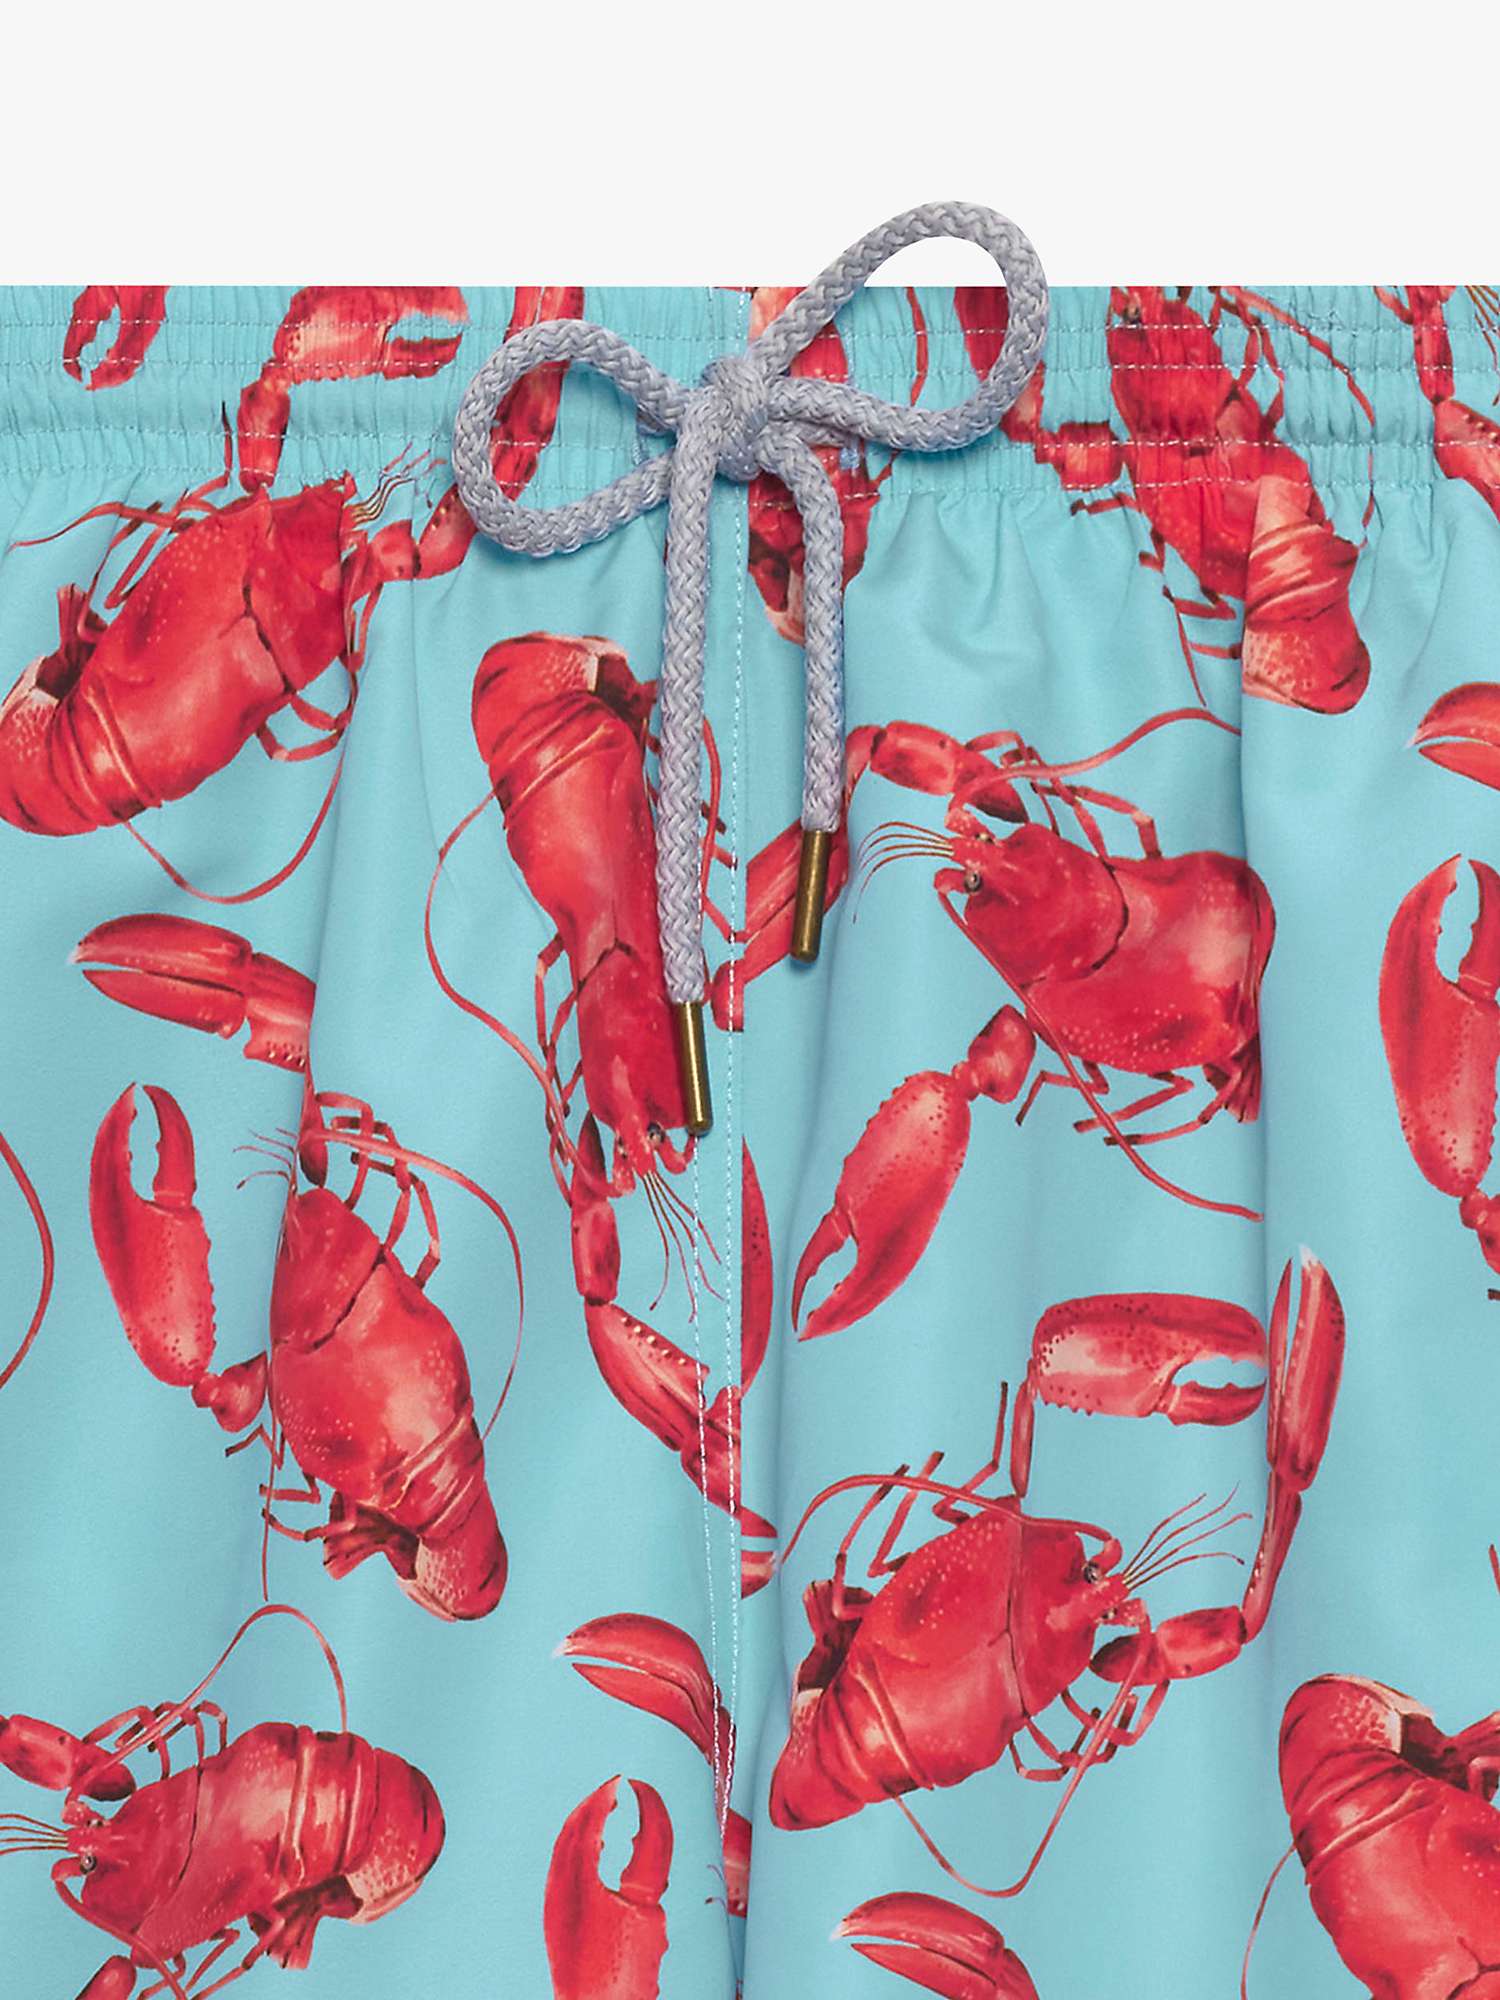 Buy Trotters Lobster Print Swim Shorts, Aqua Online at johnlewis.com